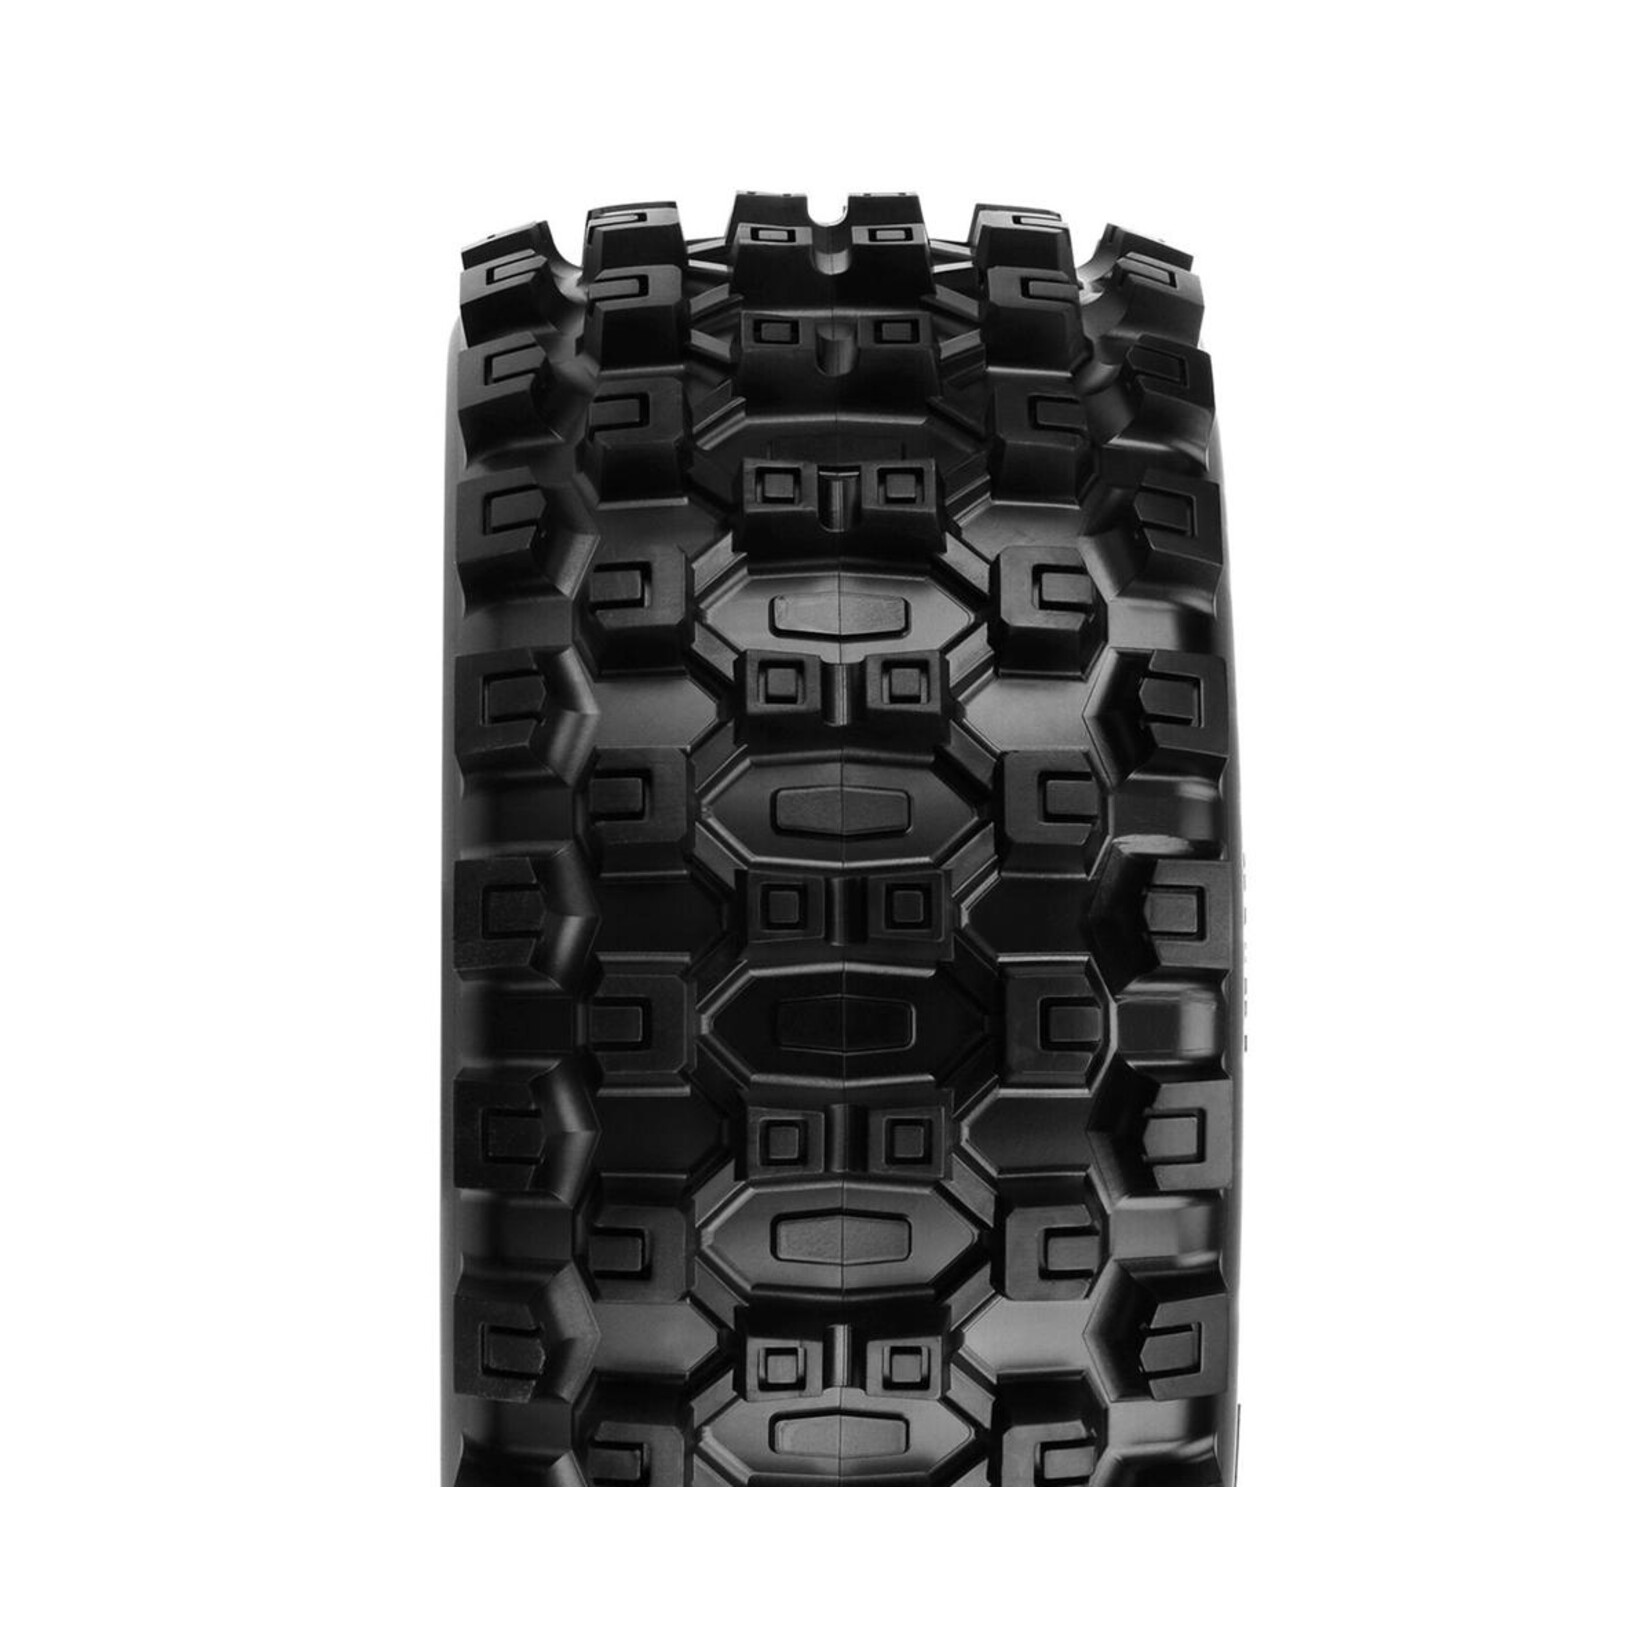 Pro-Line Pro-Line Badlands Pro-Loc All Terrain Tires (2) (X-Maxx) (MX43) #10131-00